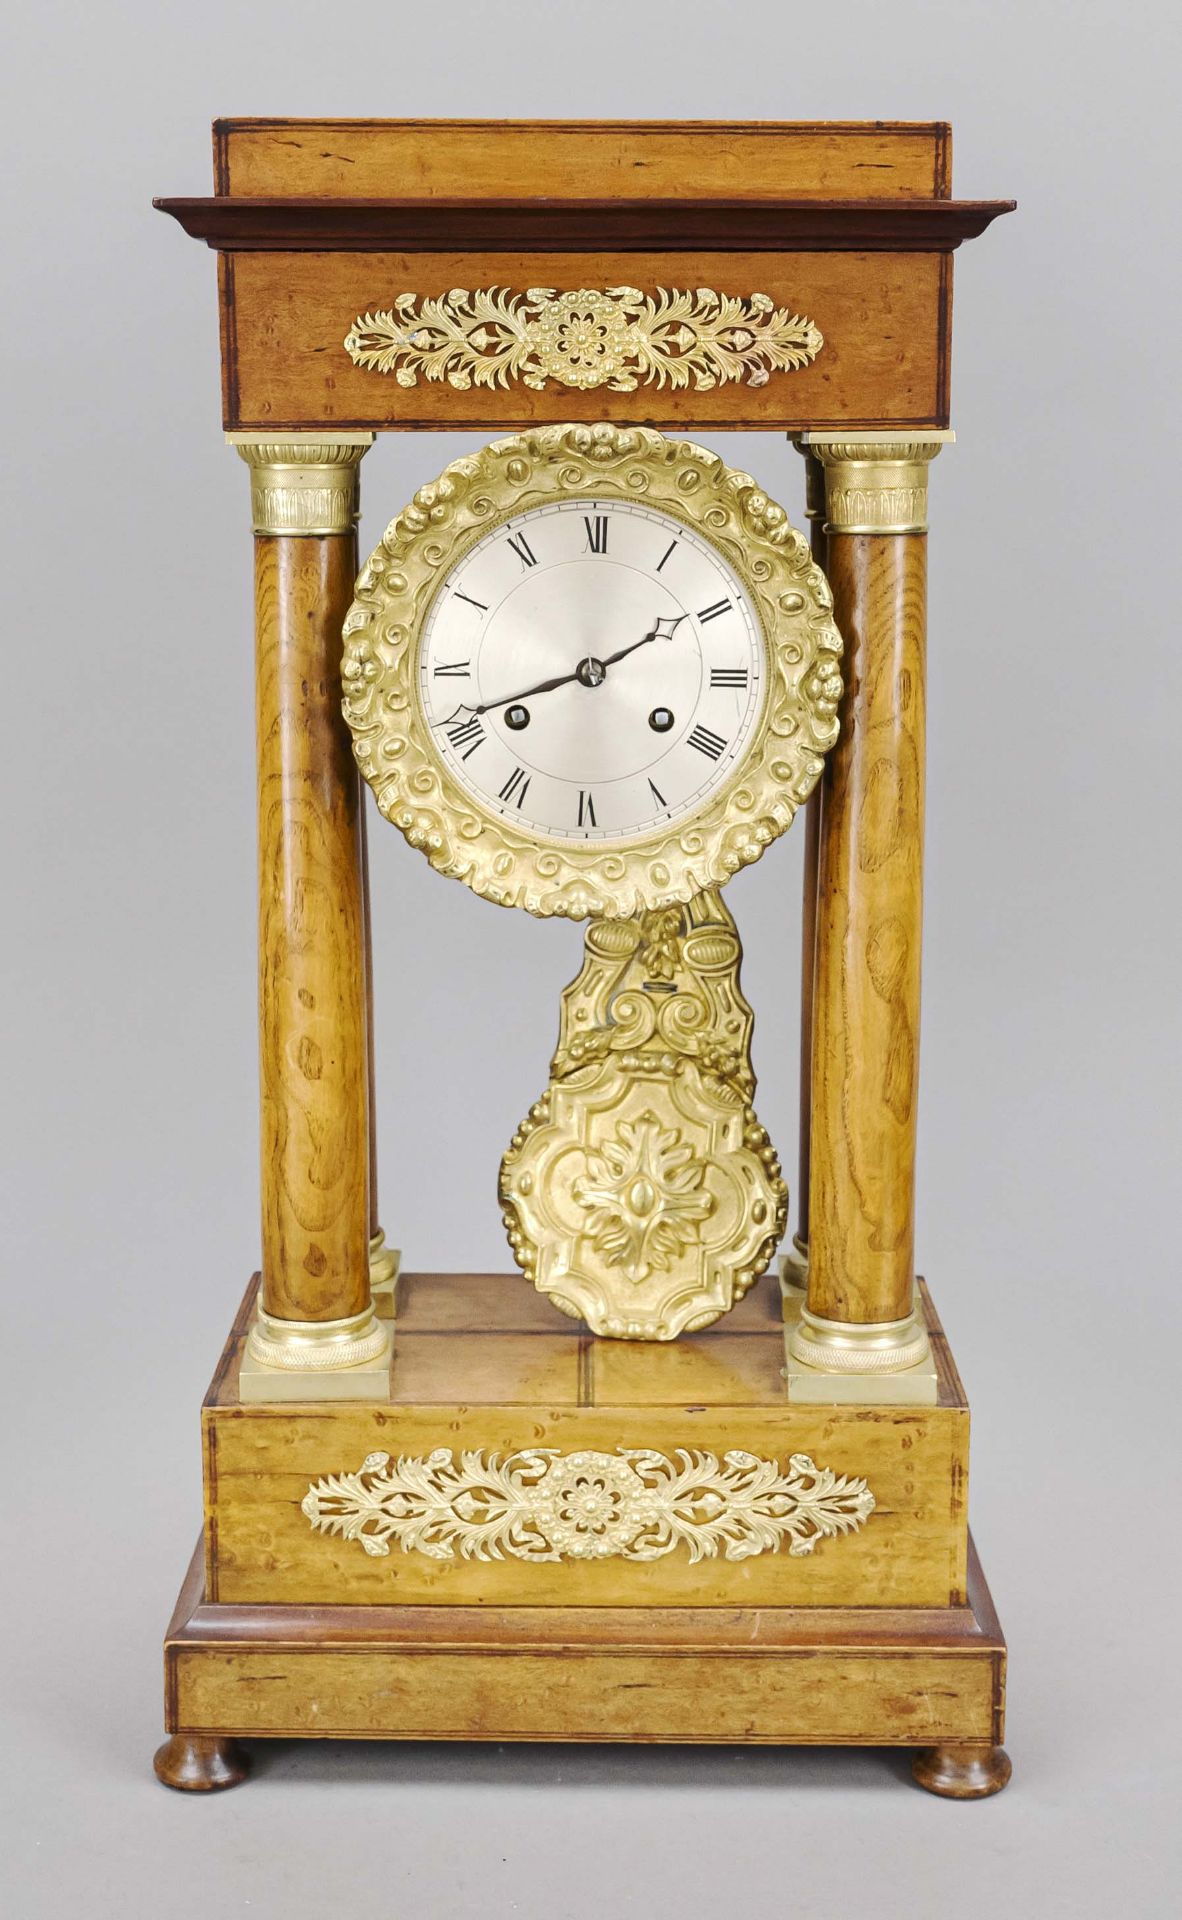 Large walnut burl portal clock, 2nd half 19th century, decorated with darker thread inlays,